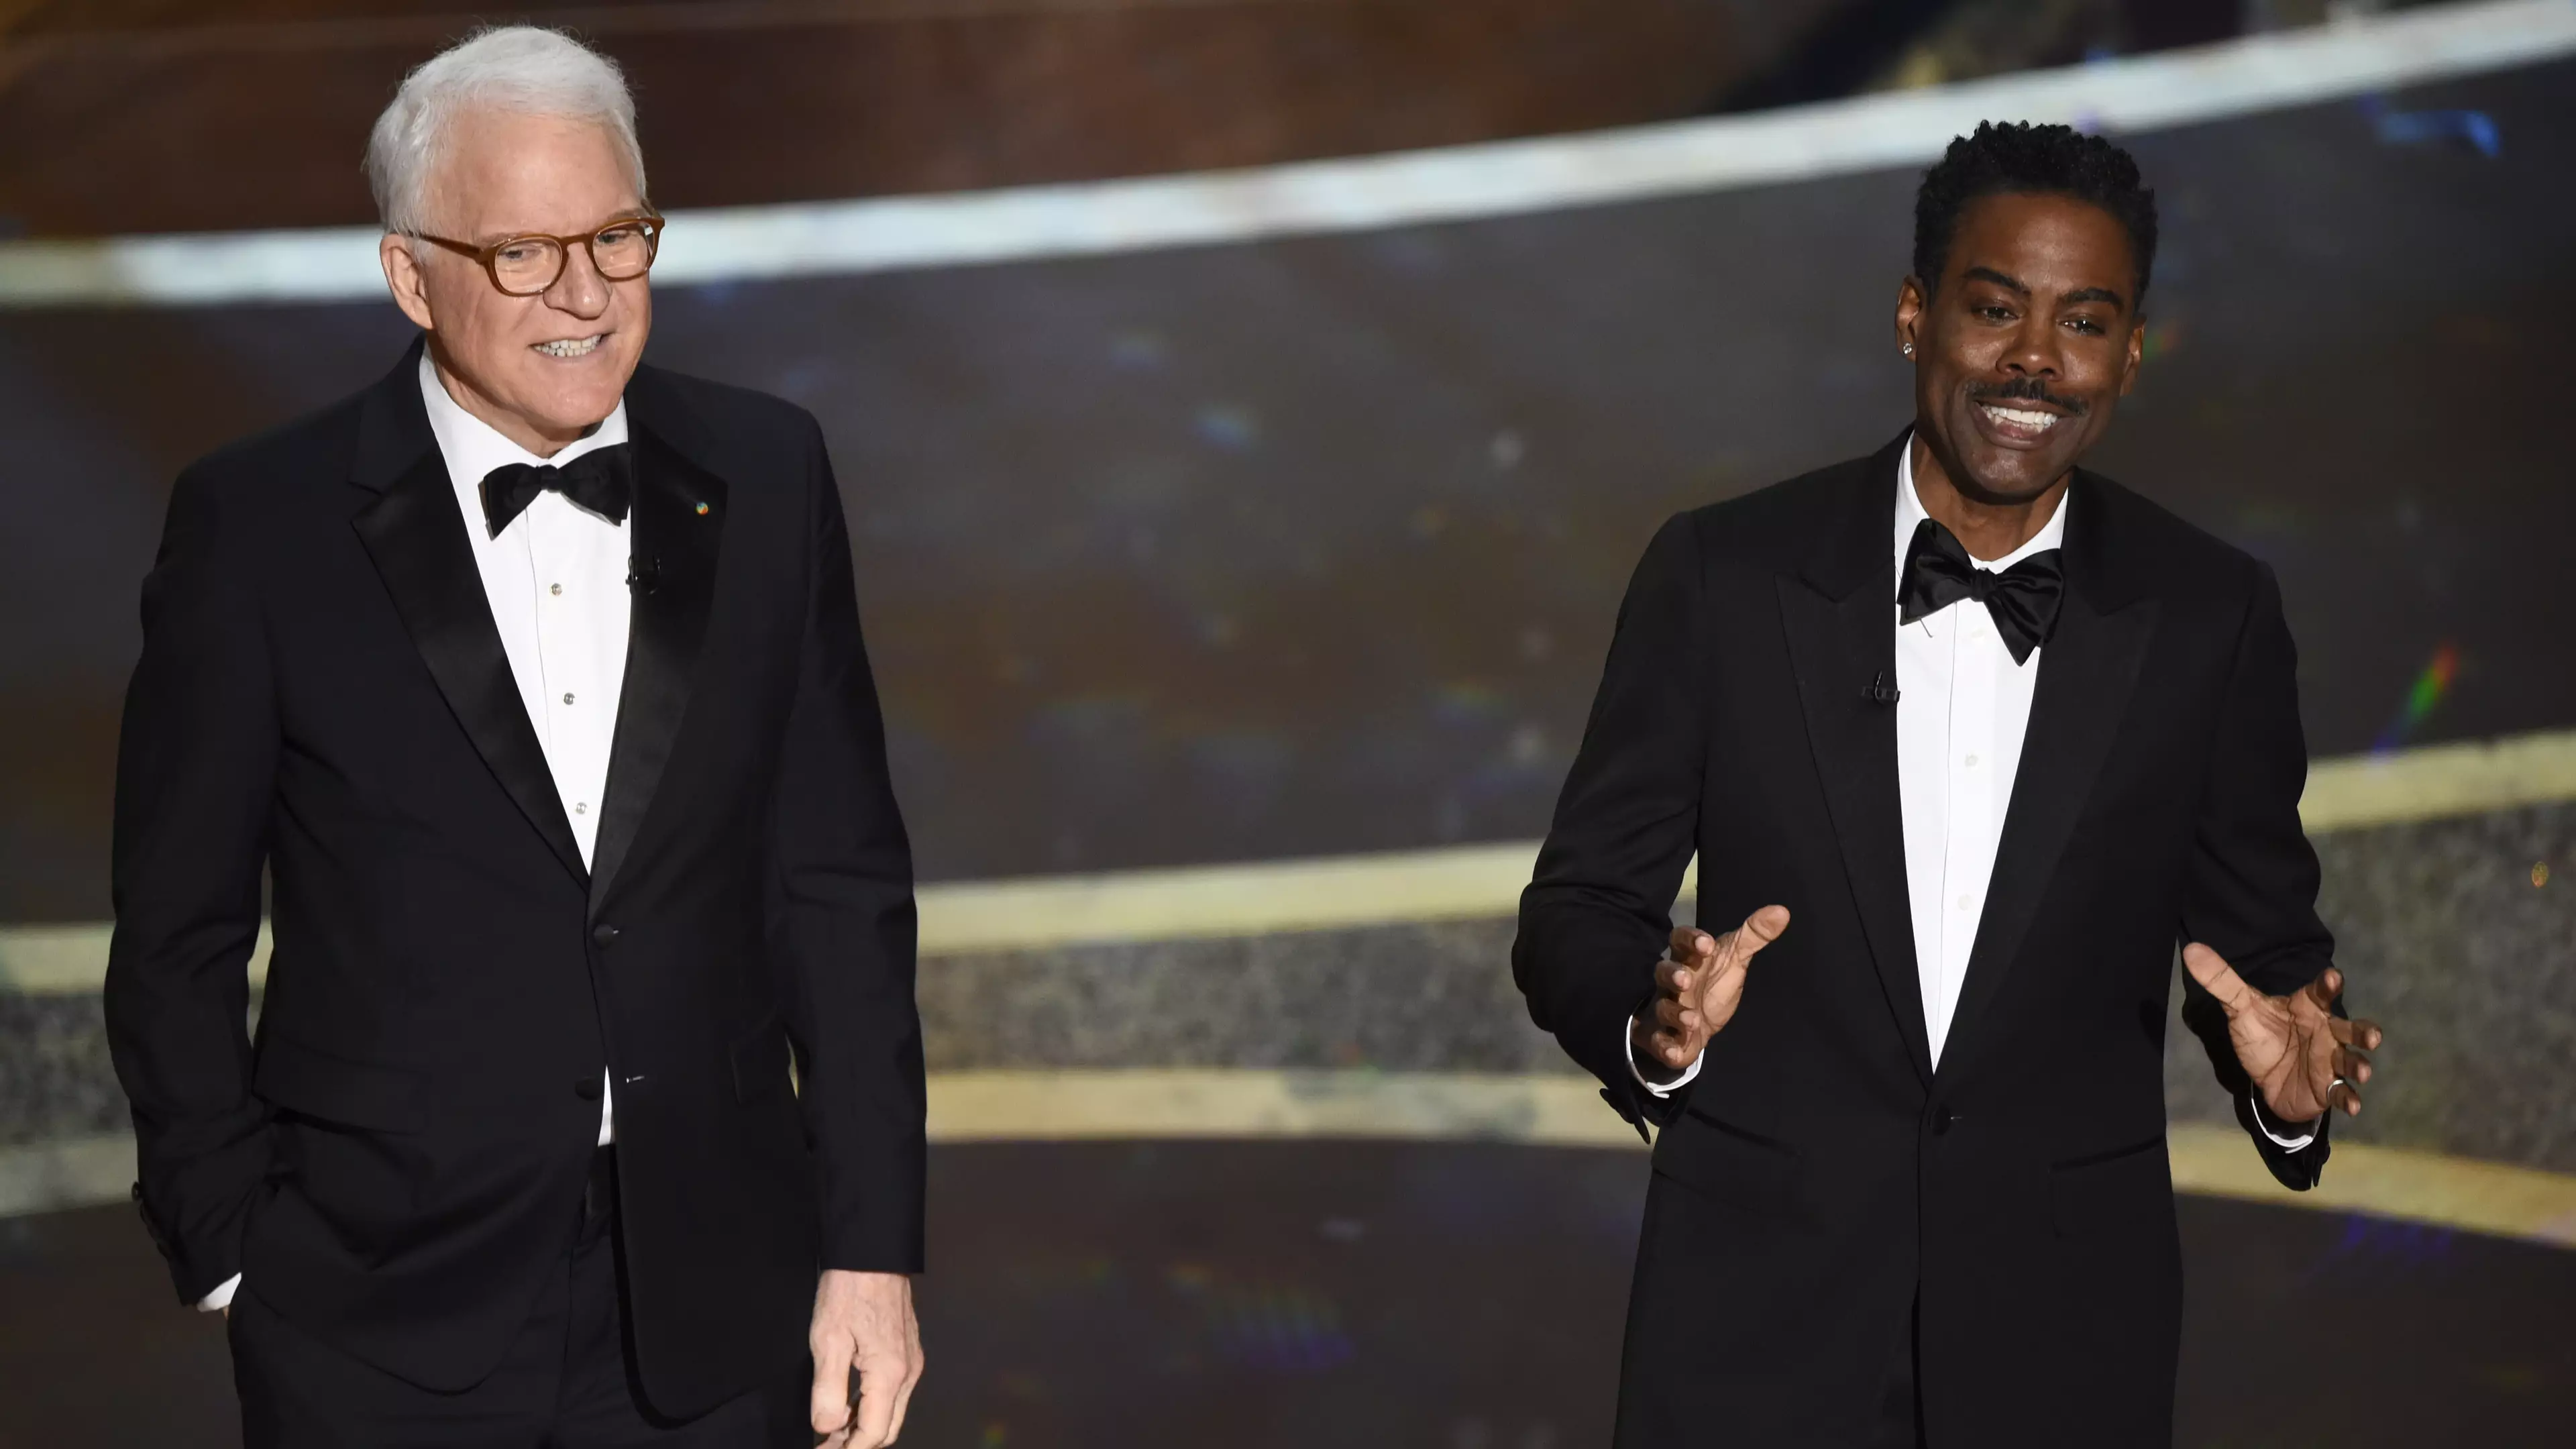 Chris Rock Takes Aim At Jeff Bezos During Oscars Opening Monologue 